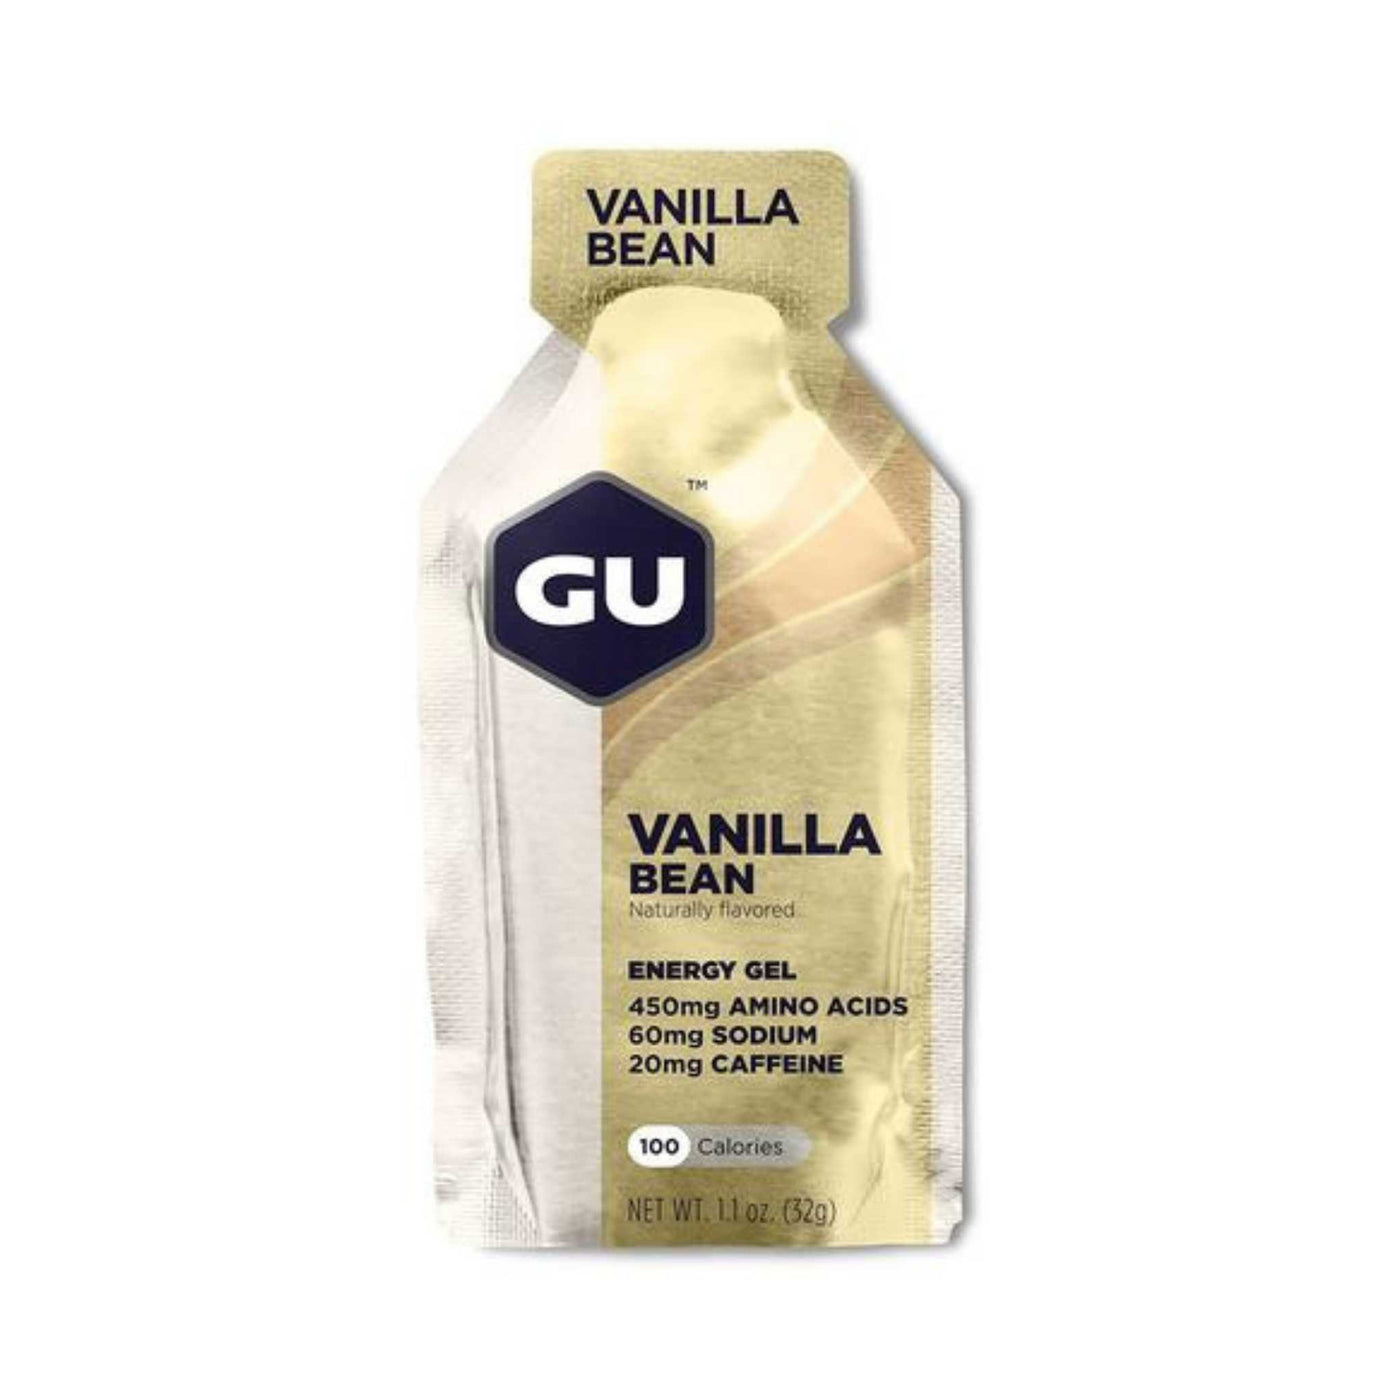 Gu Energy Gel - Vanilla Bean | Trail Running Gels and Nutrition | Further Faster Christchurch NZ - Vanilla Bean